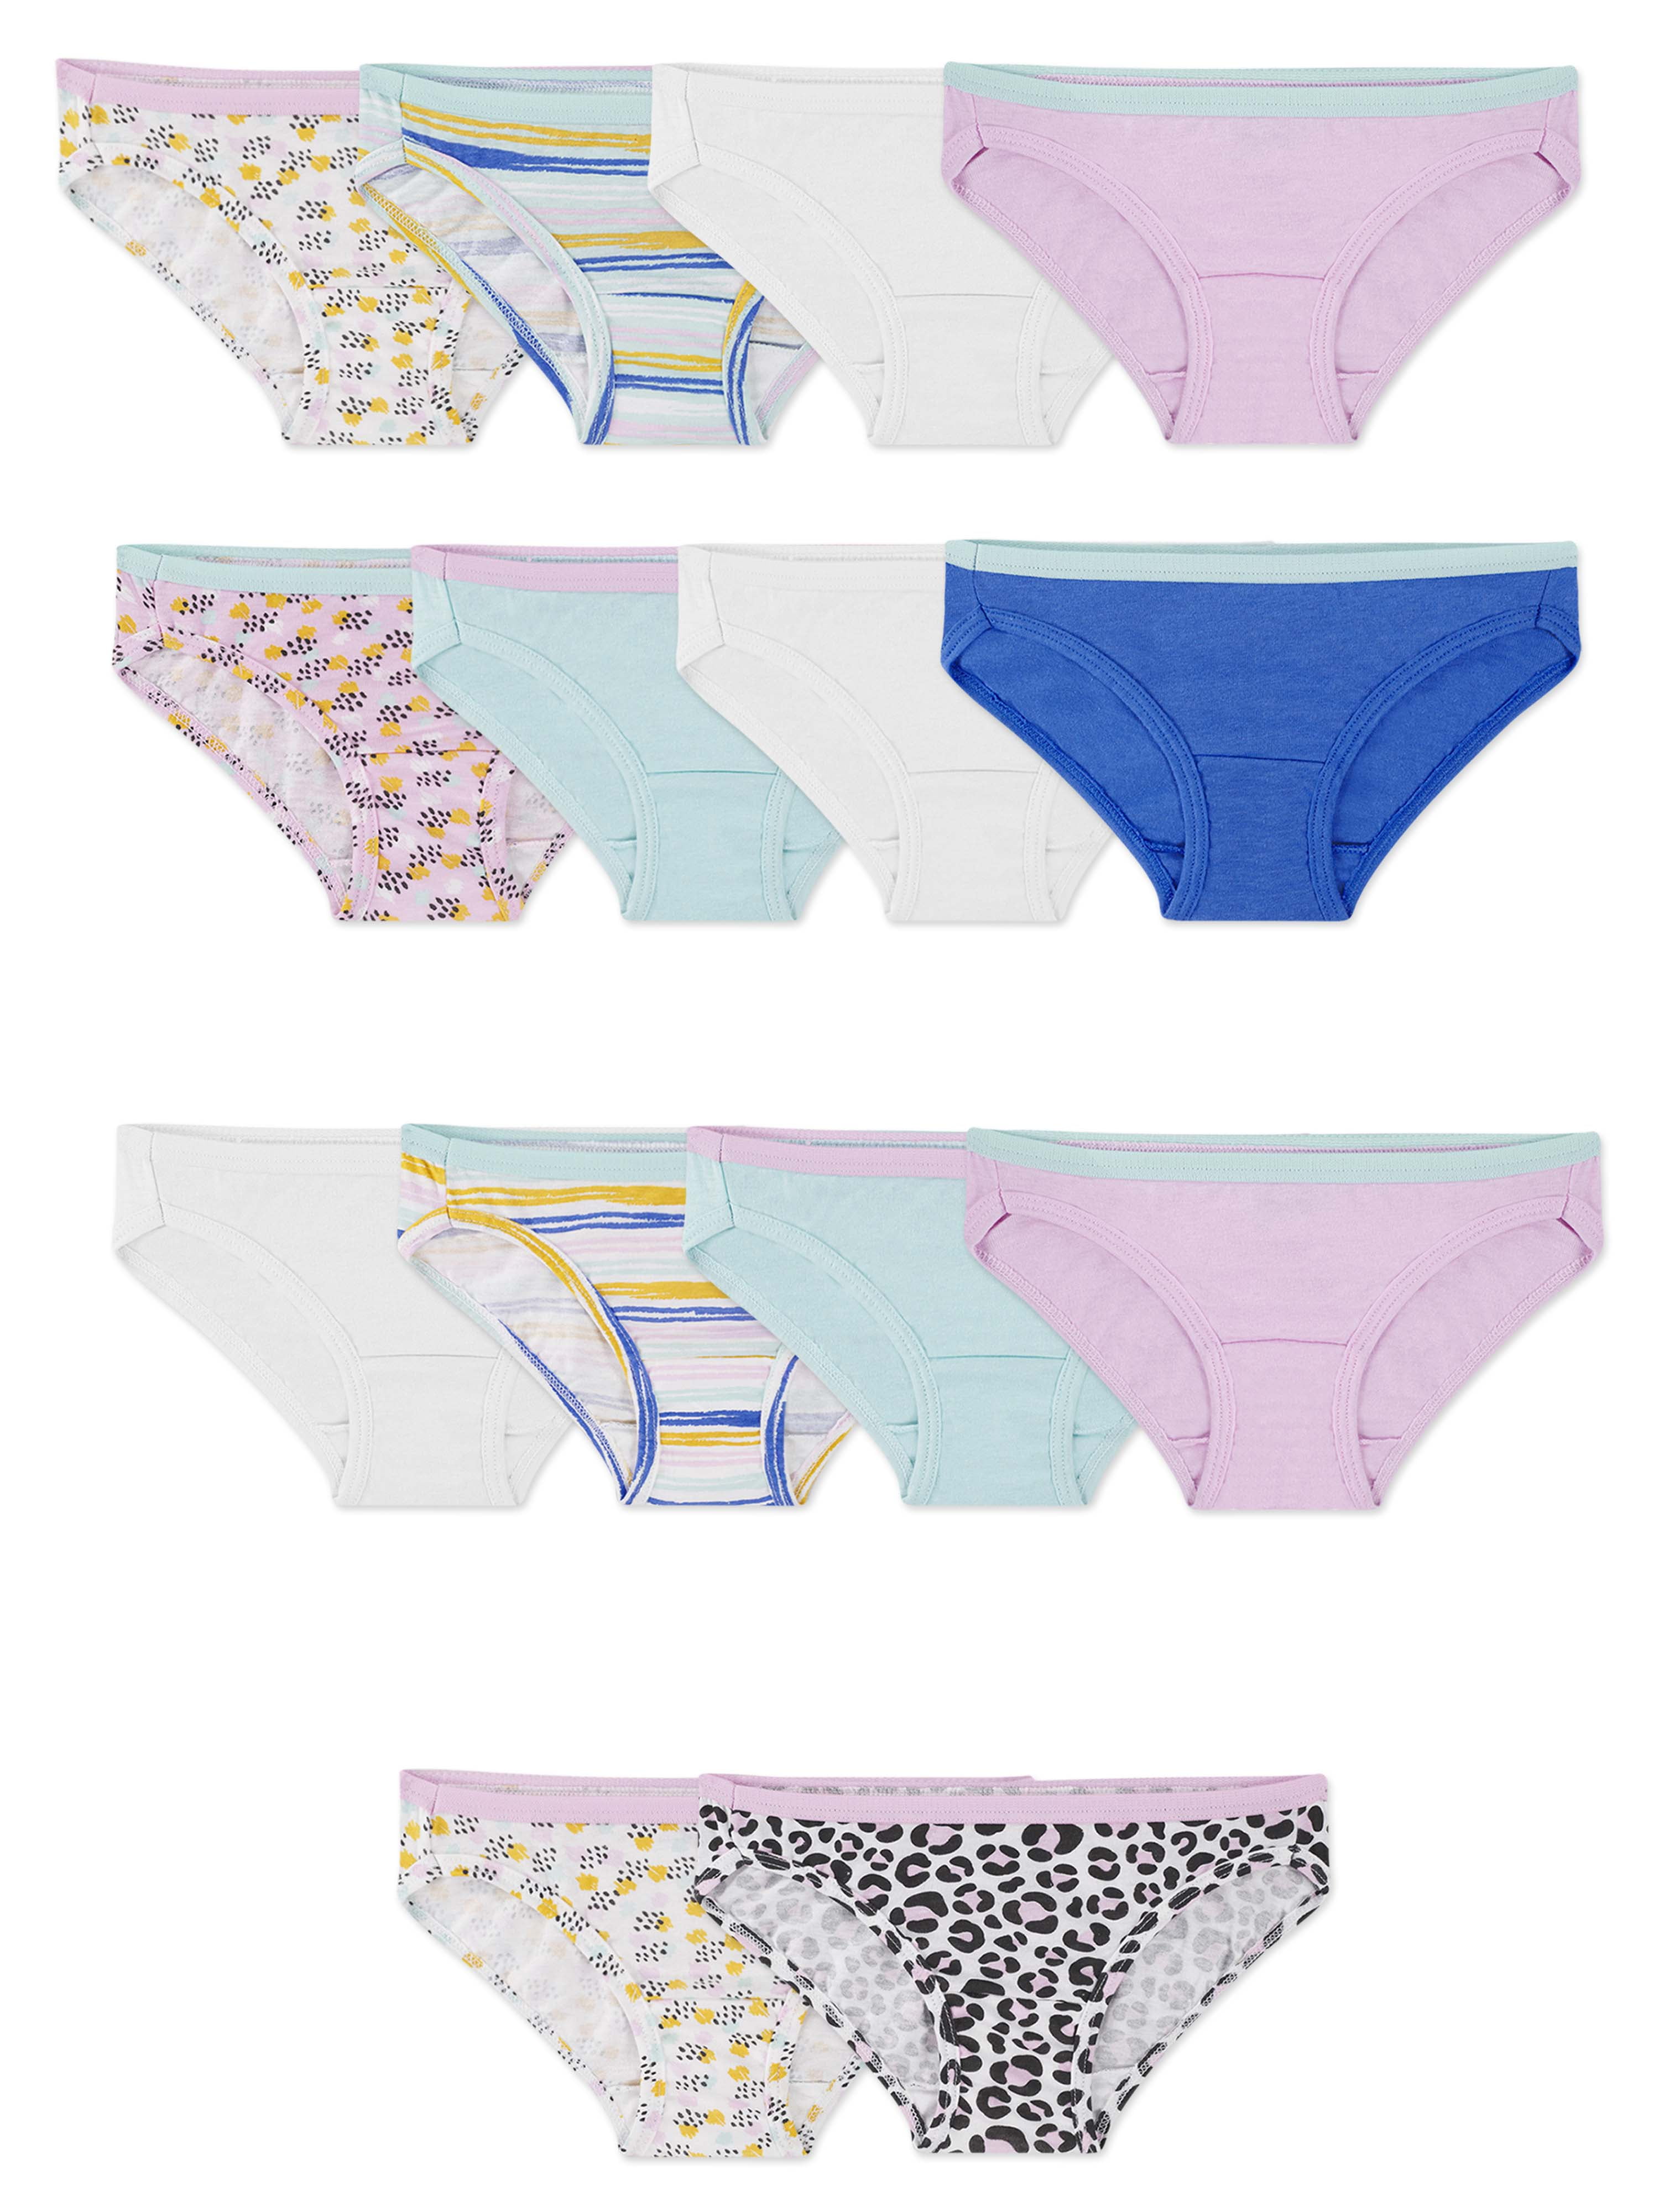 Fruit of the Loom Girls' Cotton Bikini Underwear, 14 Pack Panties Sizes 4-16